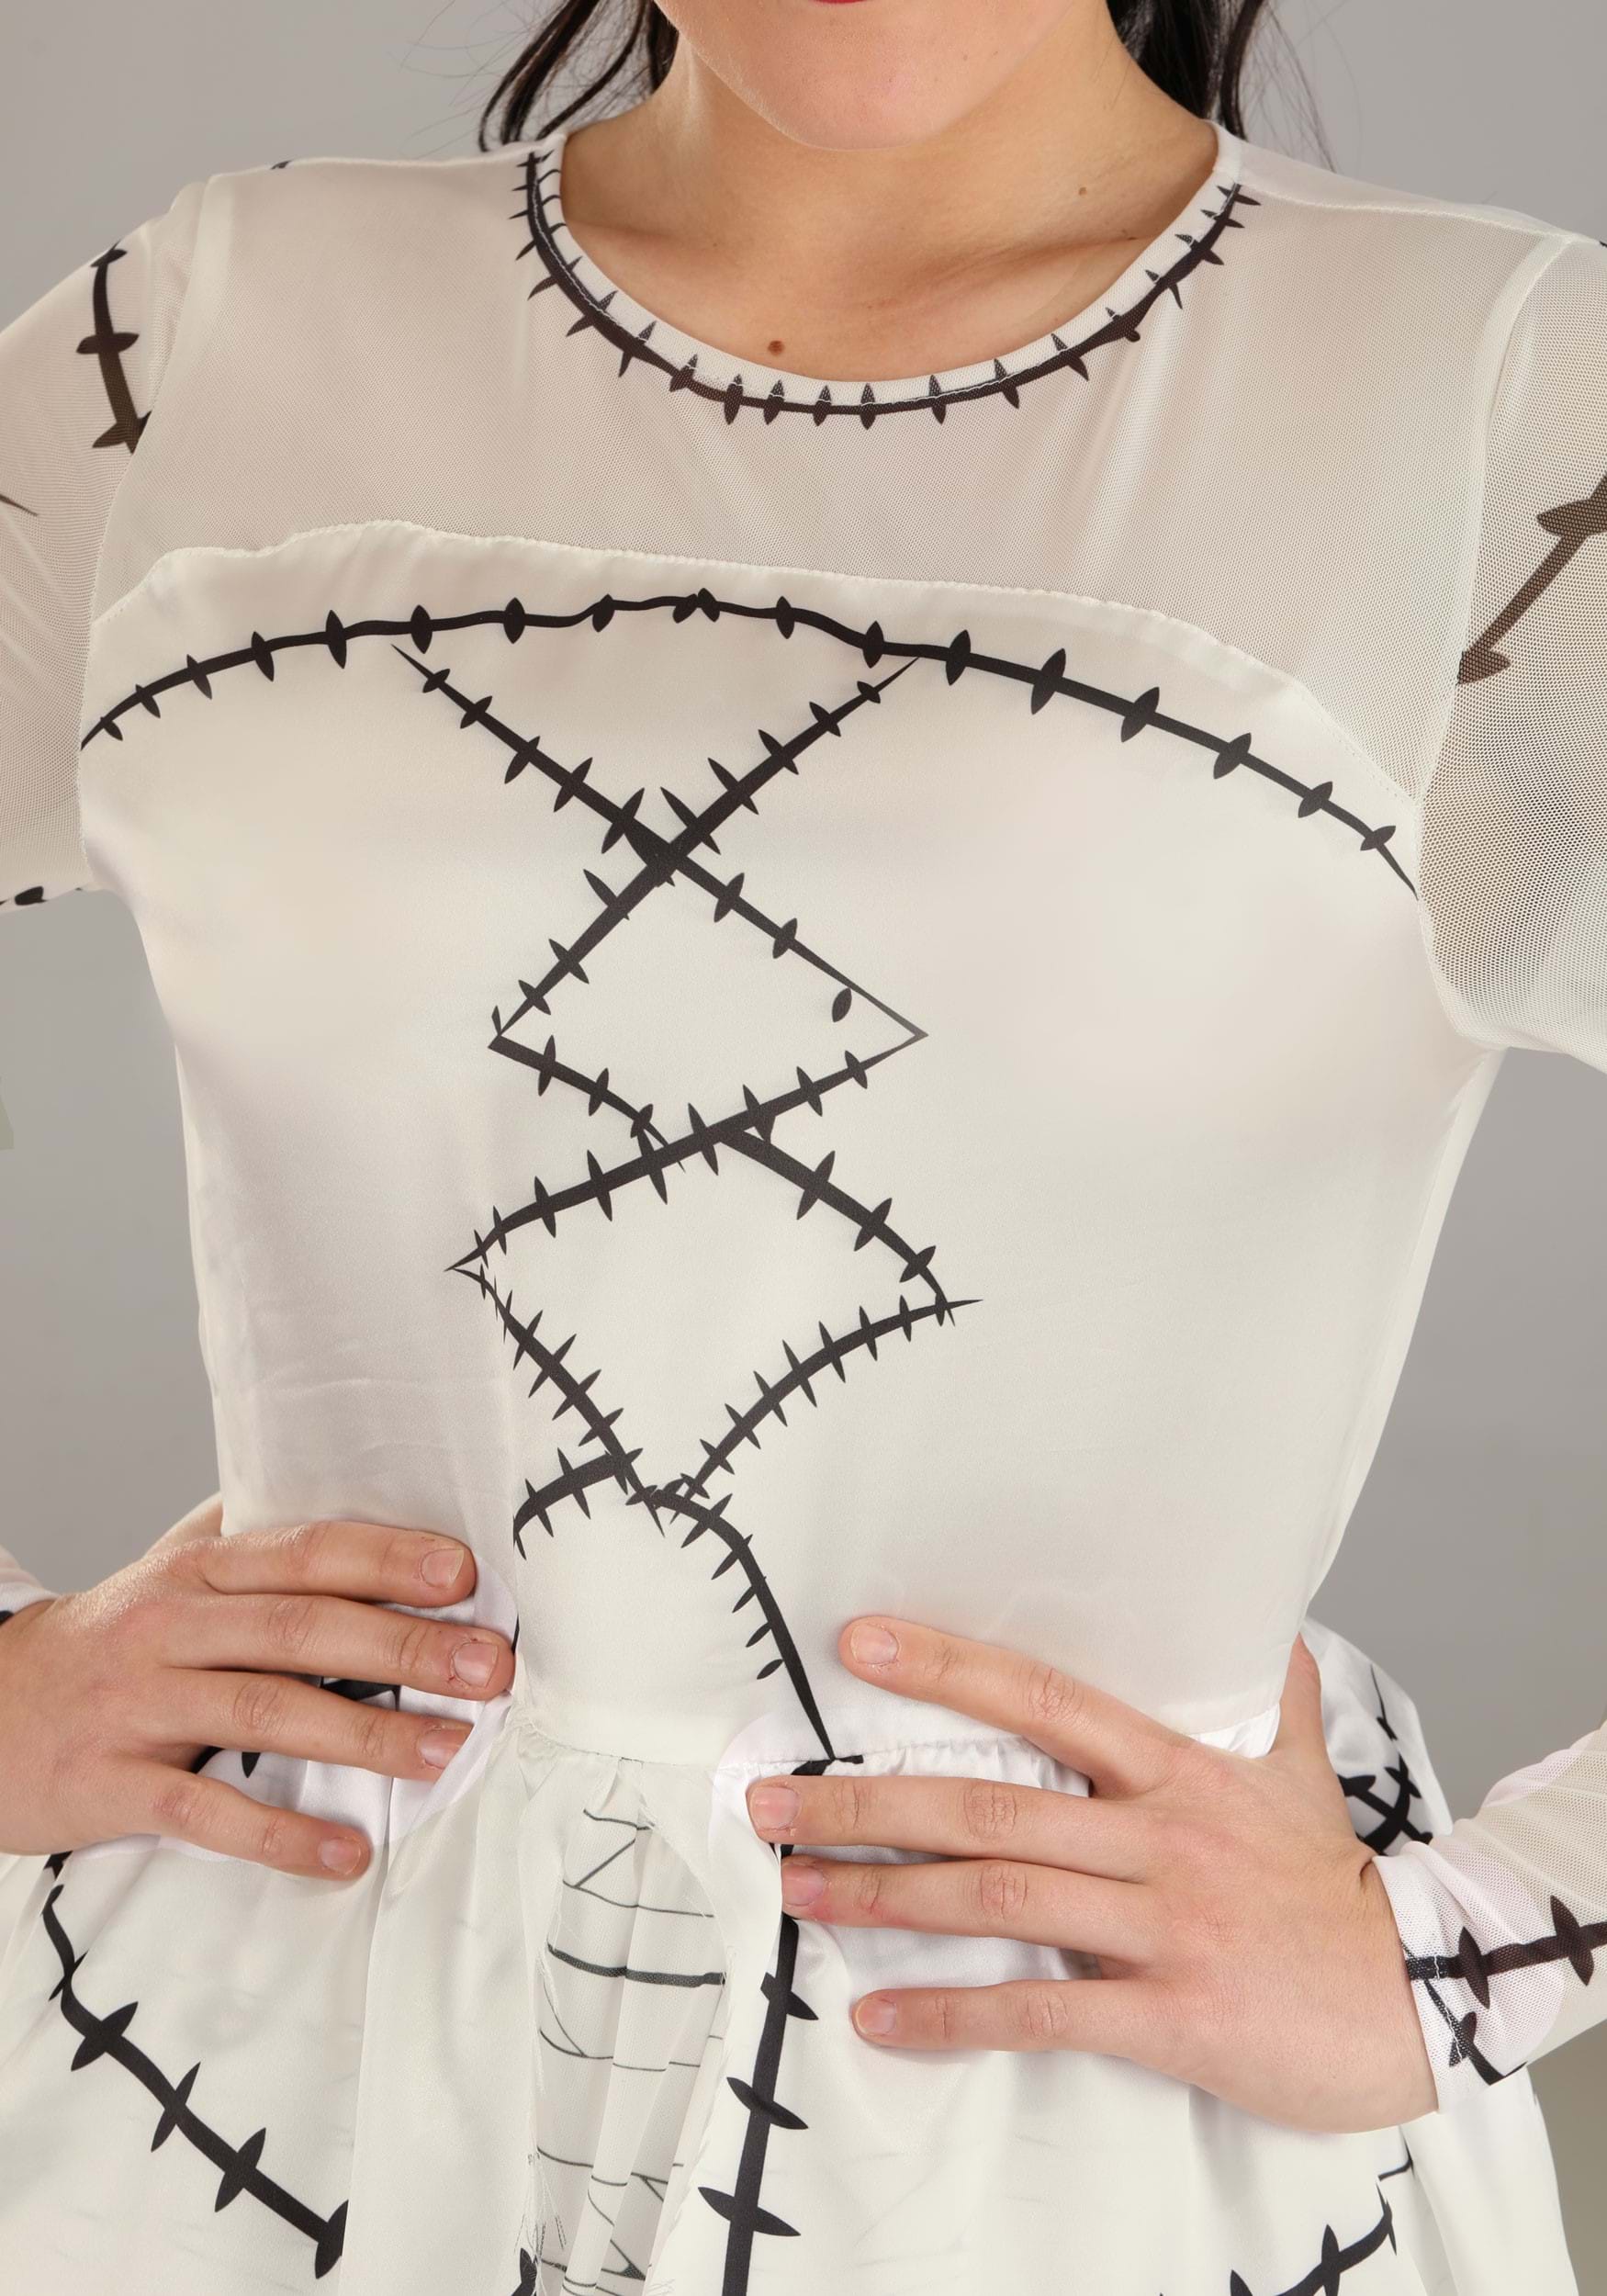 Bride Of Frankenstein Adult Costume Dress